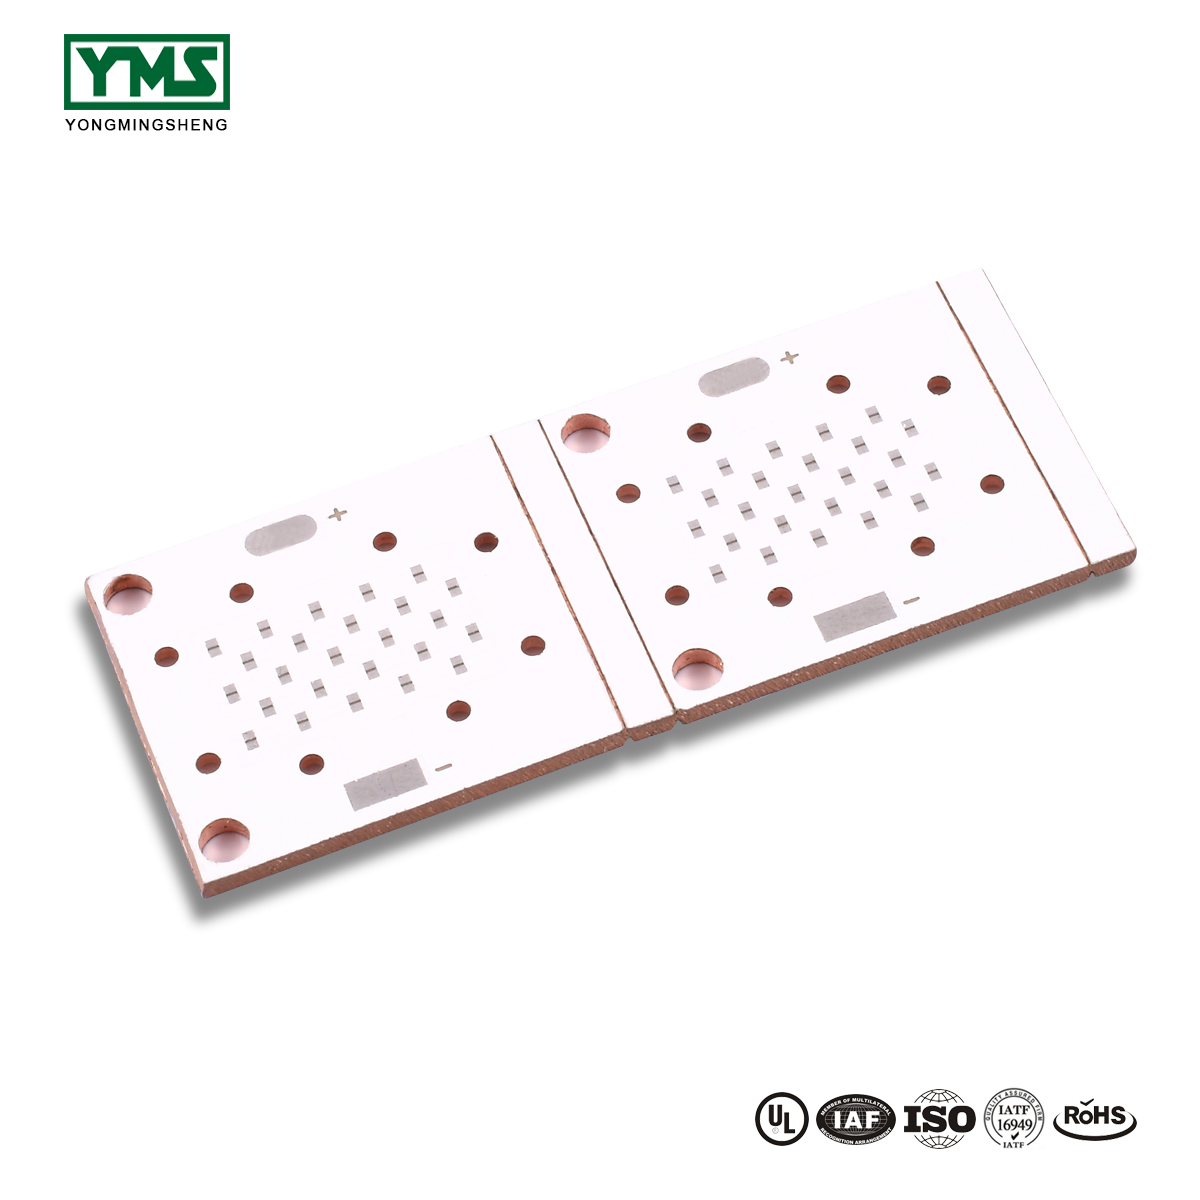 Factory making Fingerprint Rigid-Flex Pcb - 1 Layer Thermoelectric Copper base Board | YMSPCB – Yongmingsheng